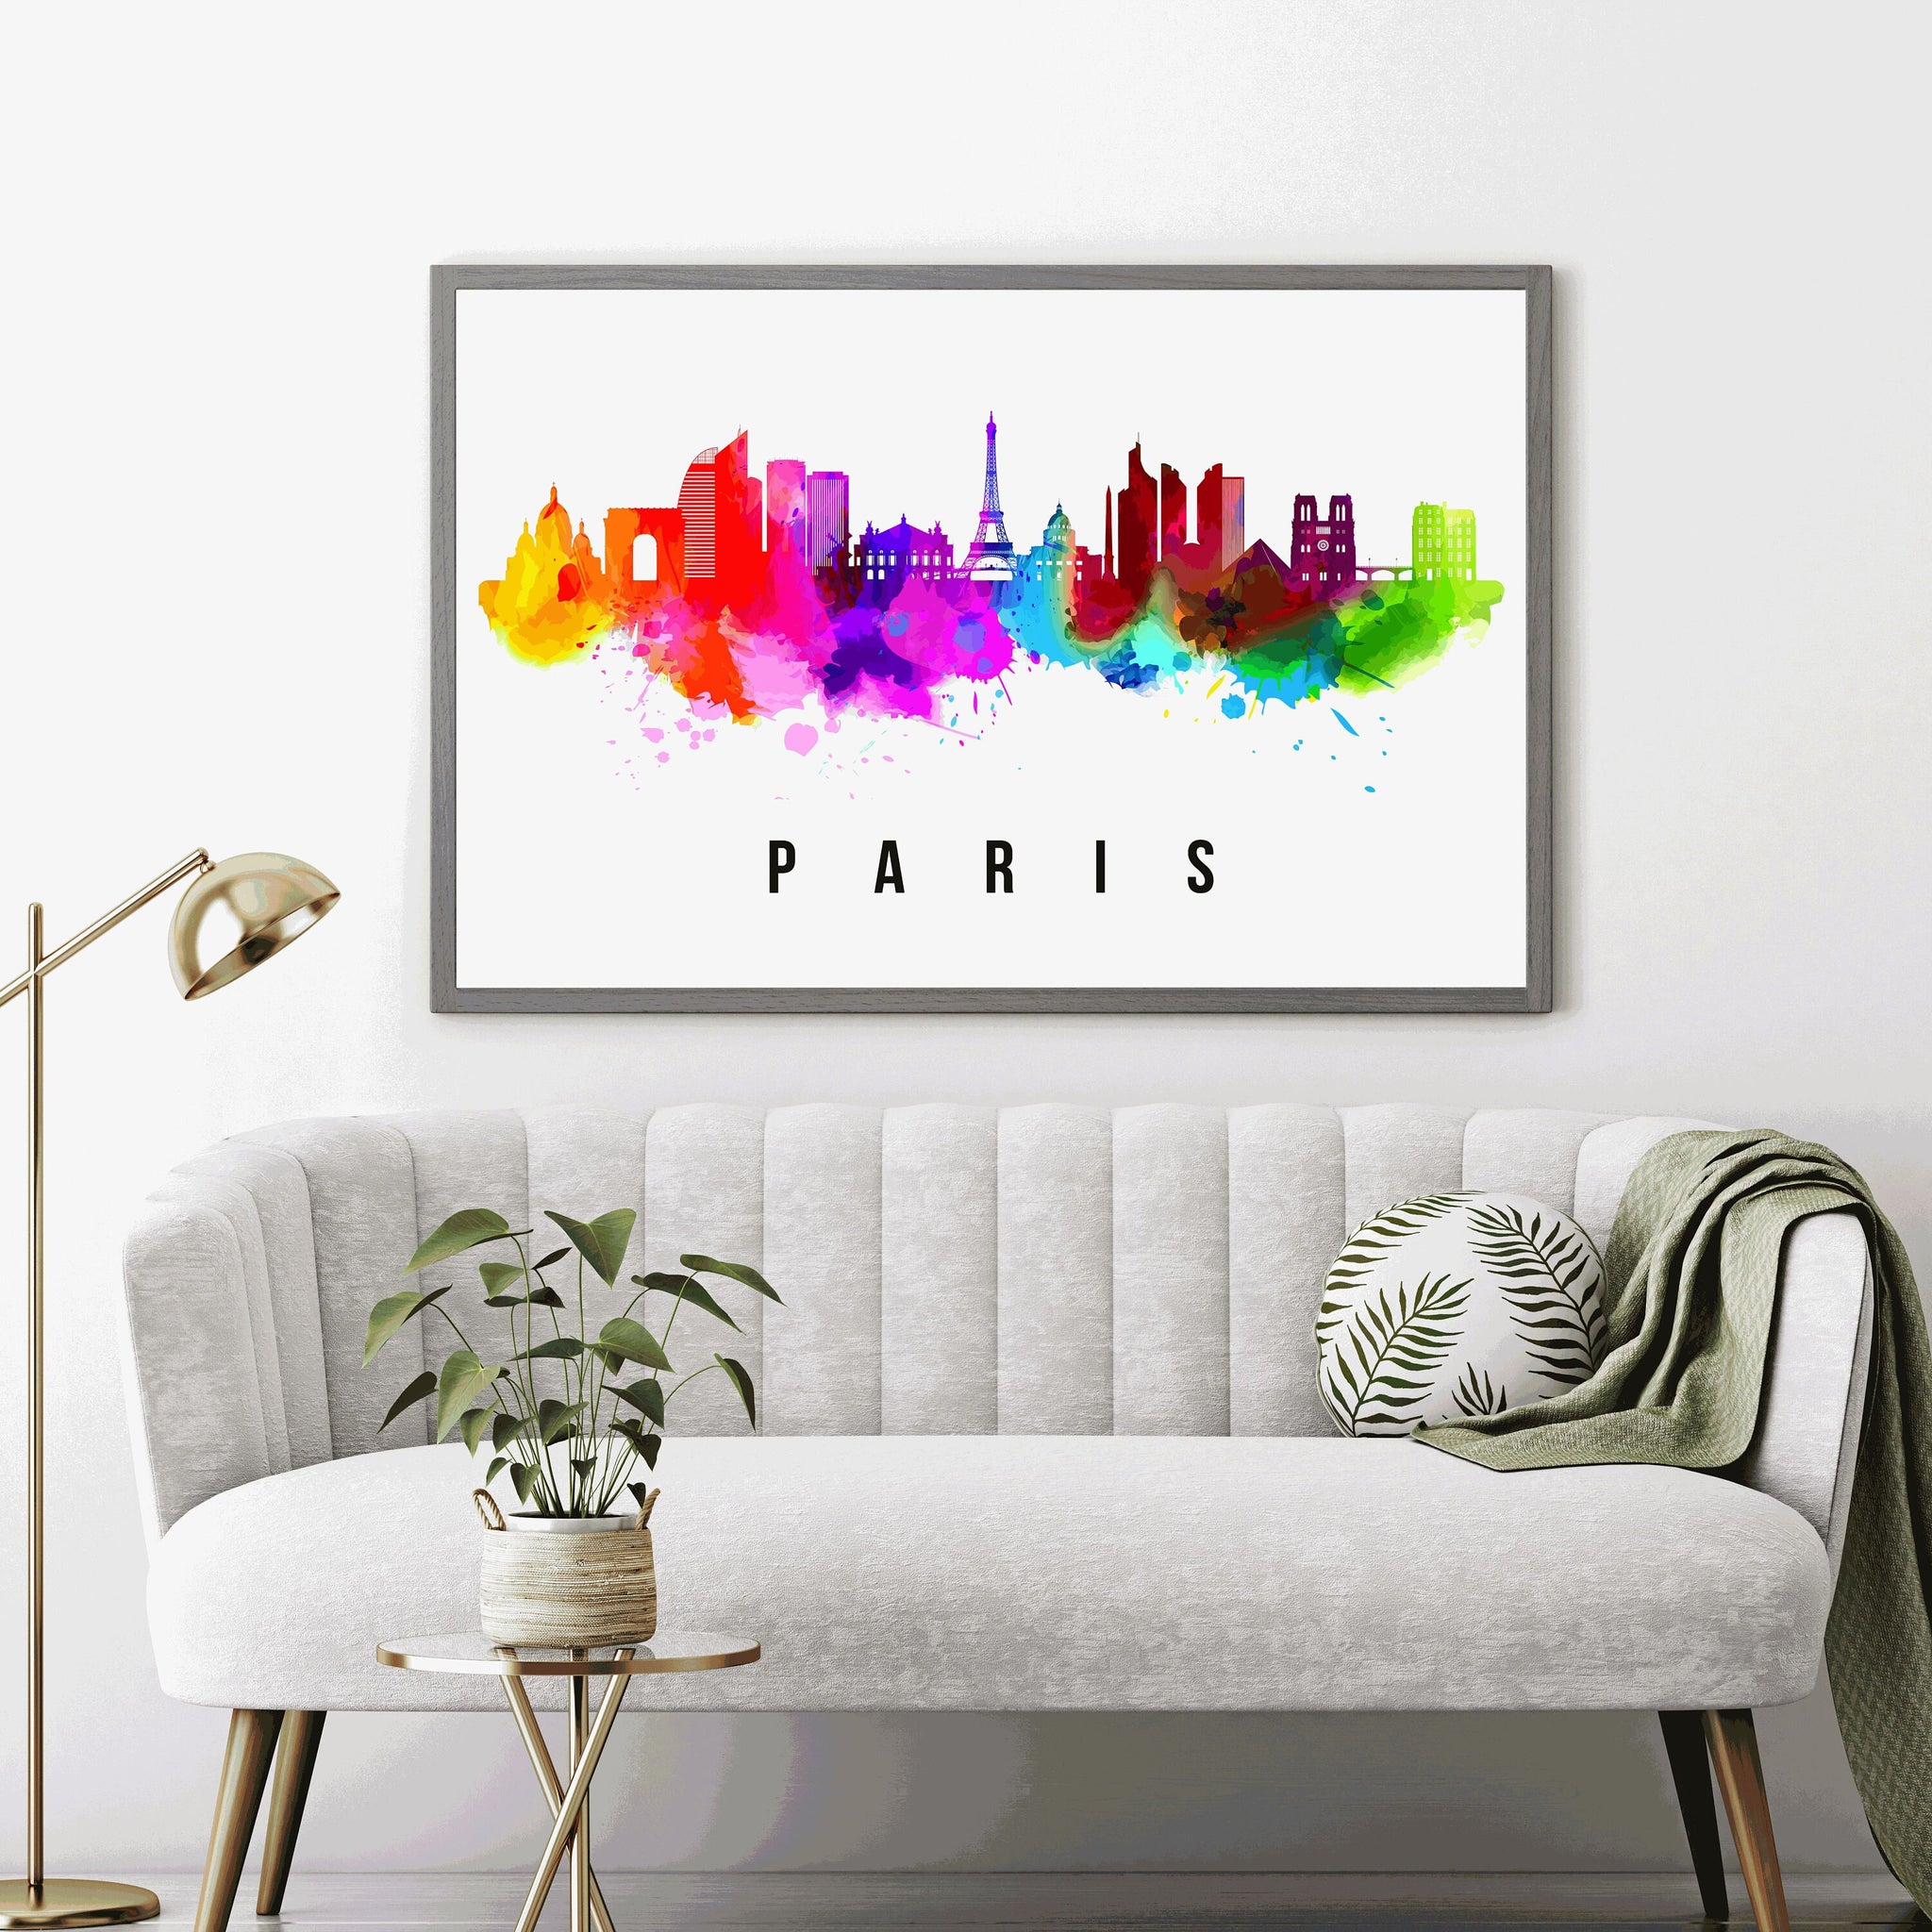 PARIS - FRANCE Poster, Skyline Poster Cityscape and Landmark Paris Illustration Home Wall Art, Office Decor